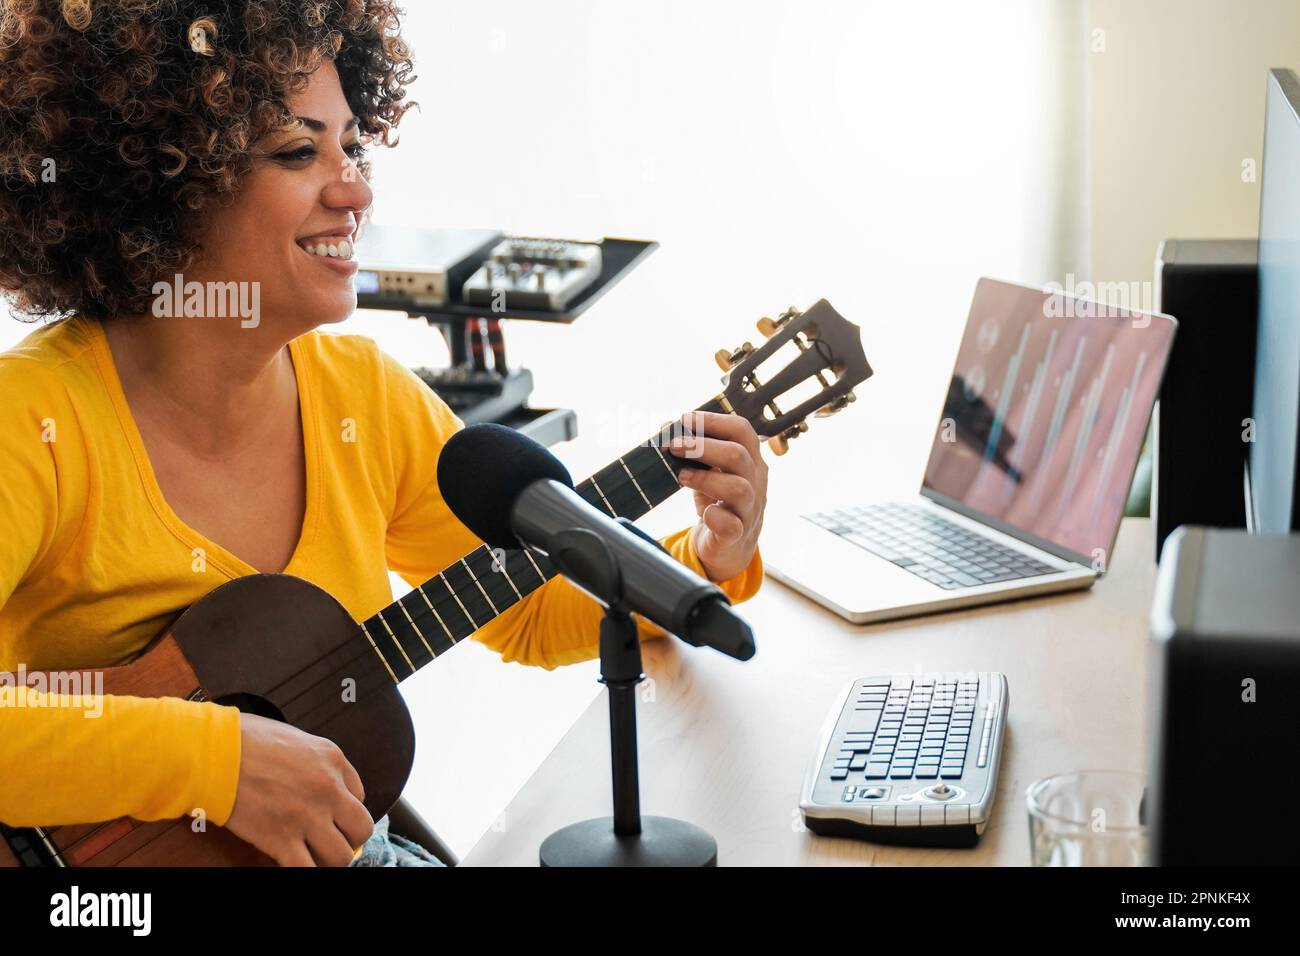 Musicista africano insdie musica home studio registrazione ukulele chitarra canzone - Audio ingegnere donna mixing album - Soft focus su donna viso Foto Stock